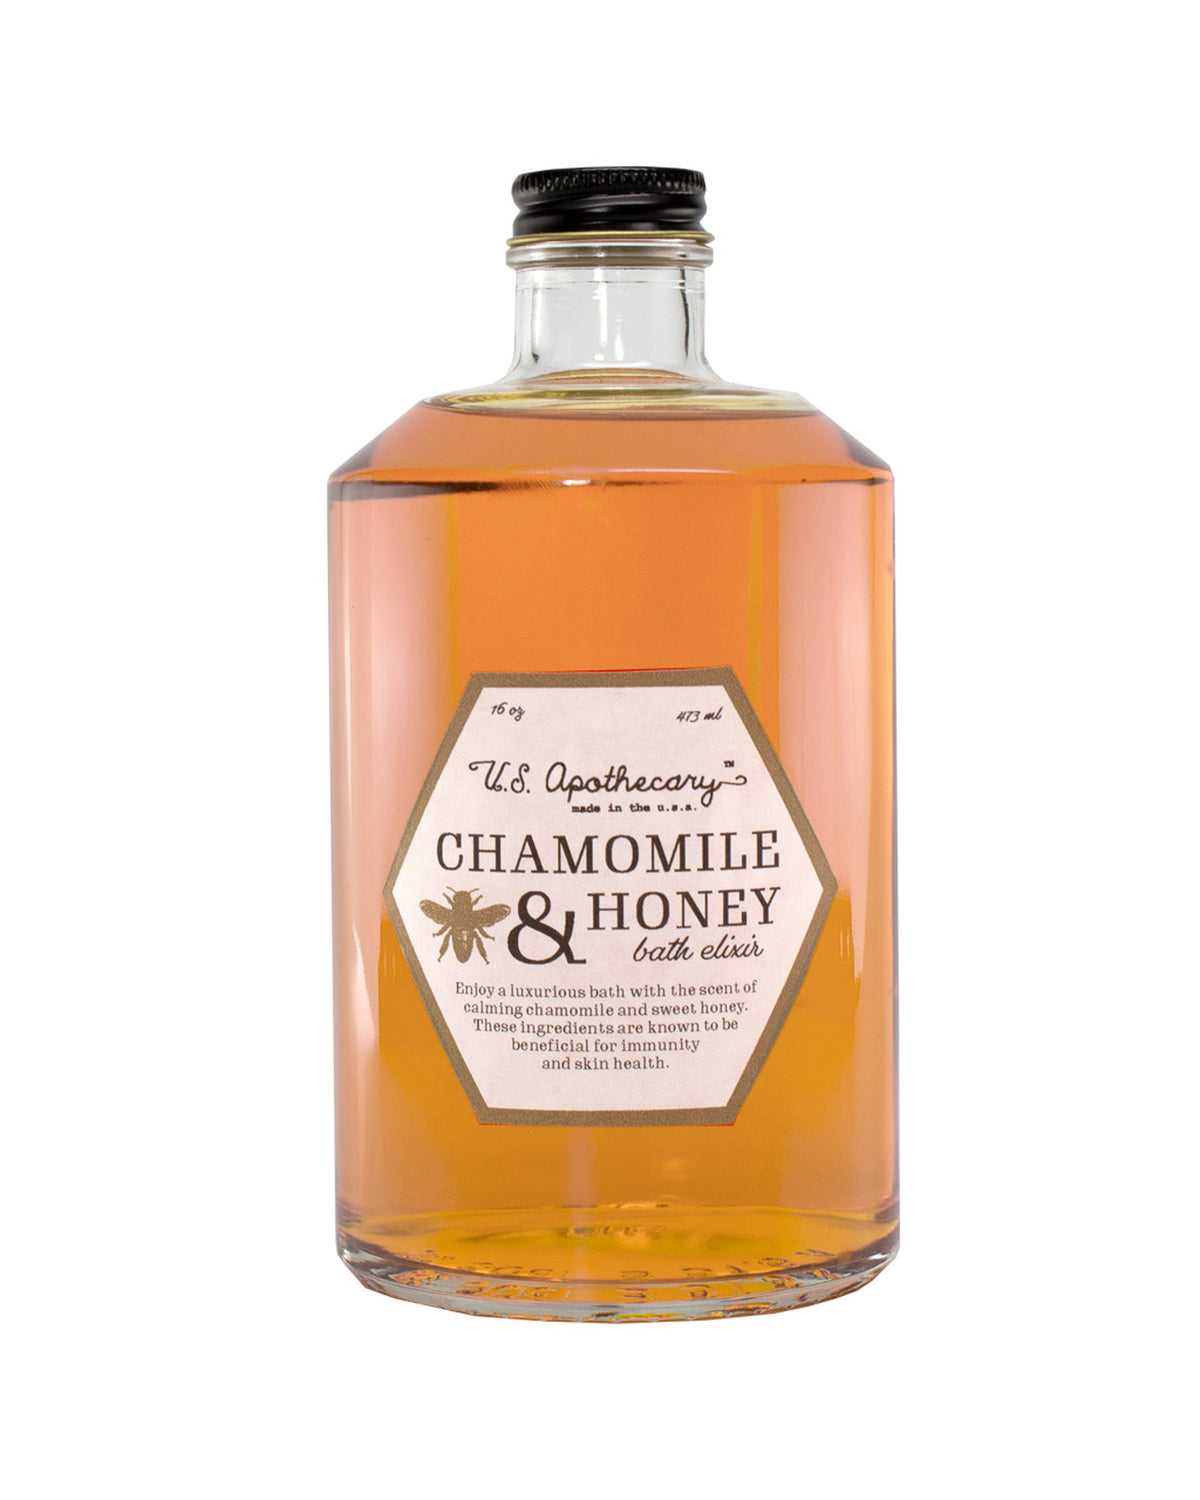 U.S. Apothecary Chamomile & Honey Bath Elixir